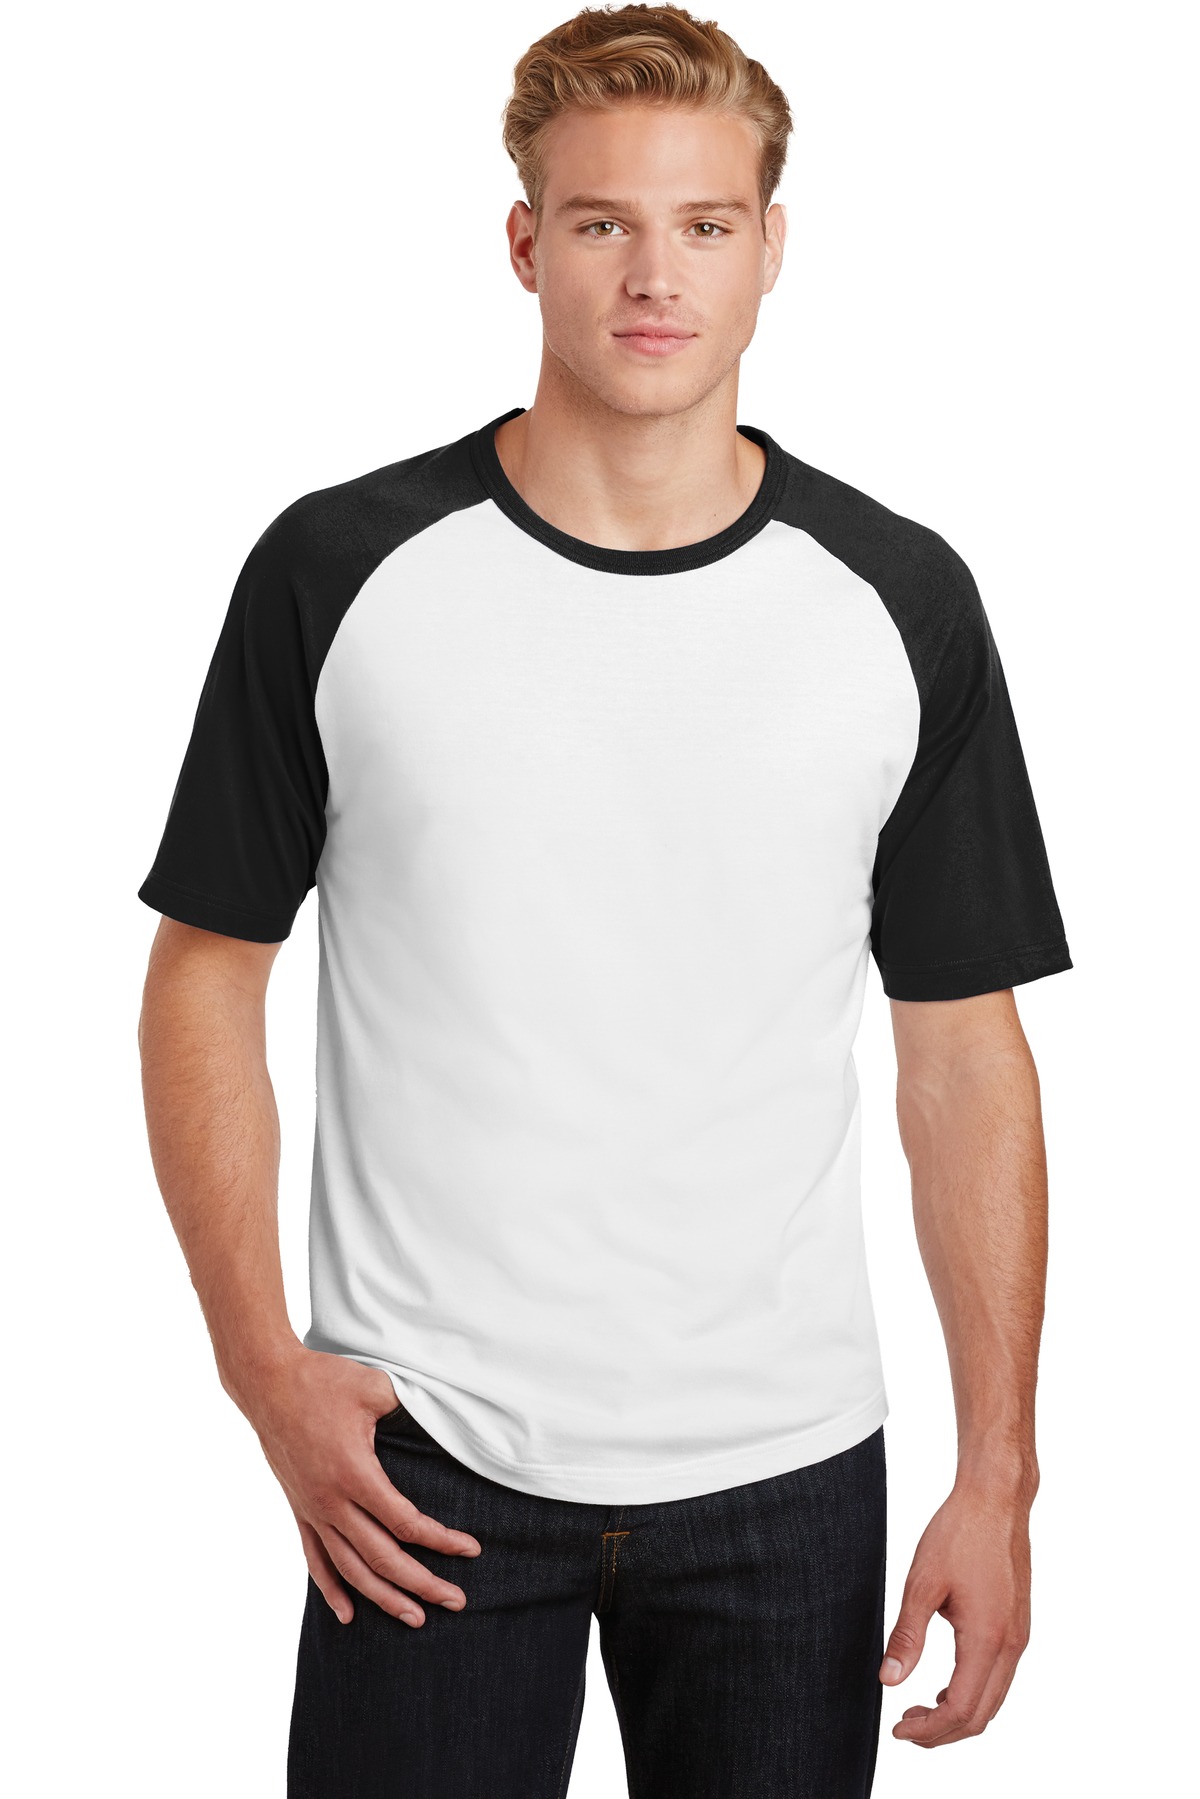 Sport-Tek Activewear T-Shirts for Hospitality ® Short Sleeve Colorblock Raglan Jersey.-Sport-Tek